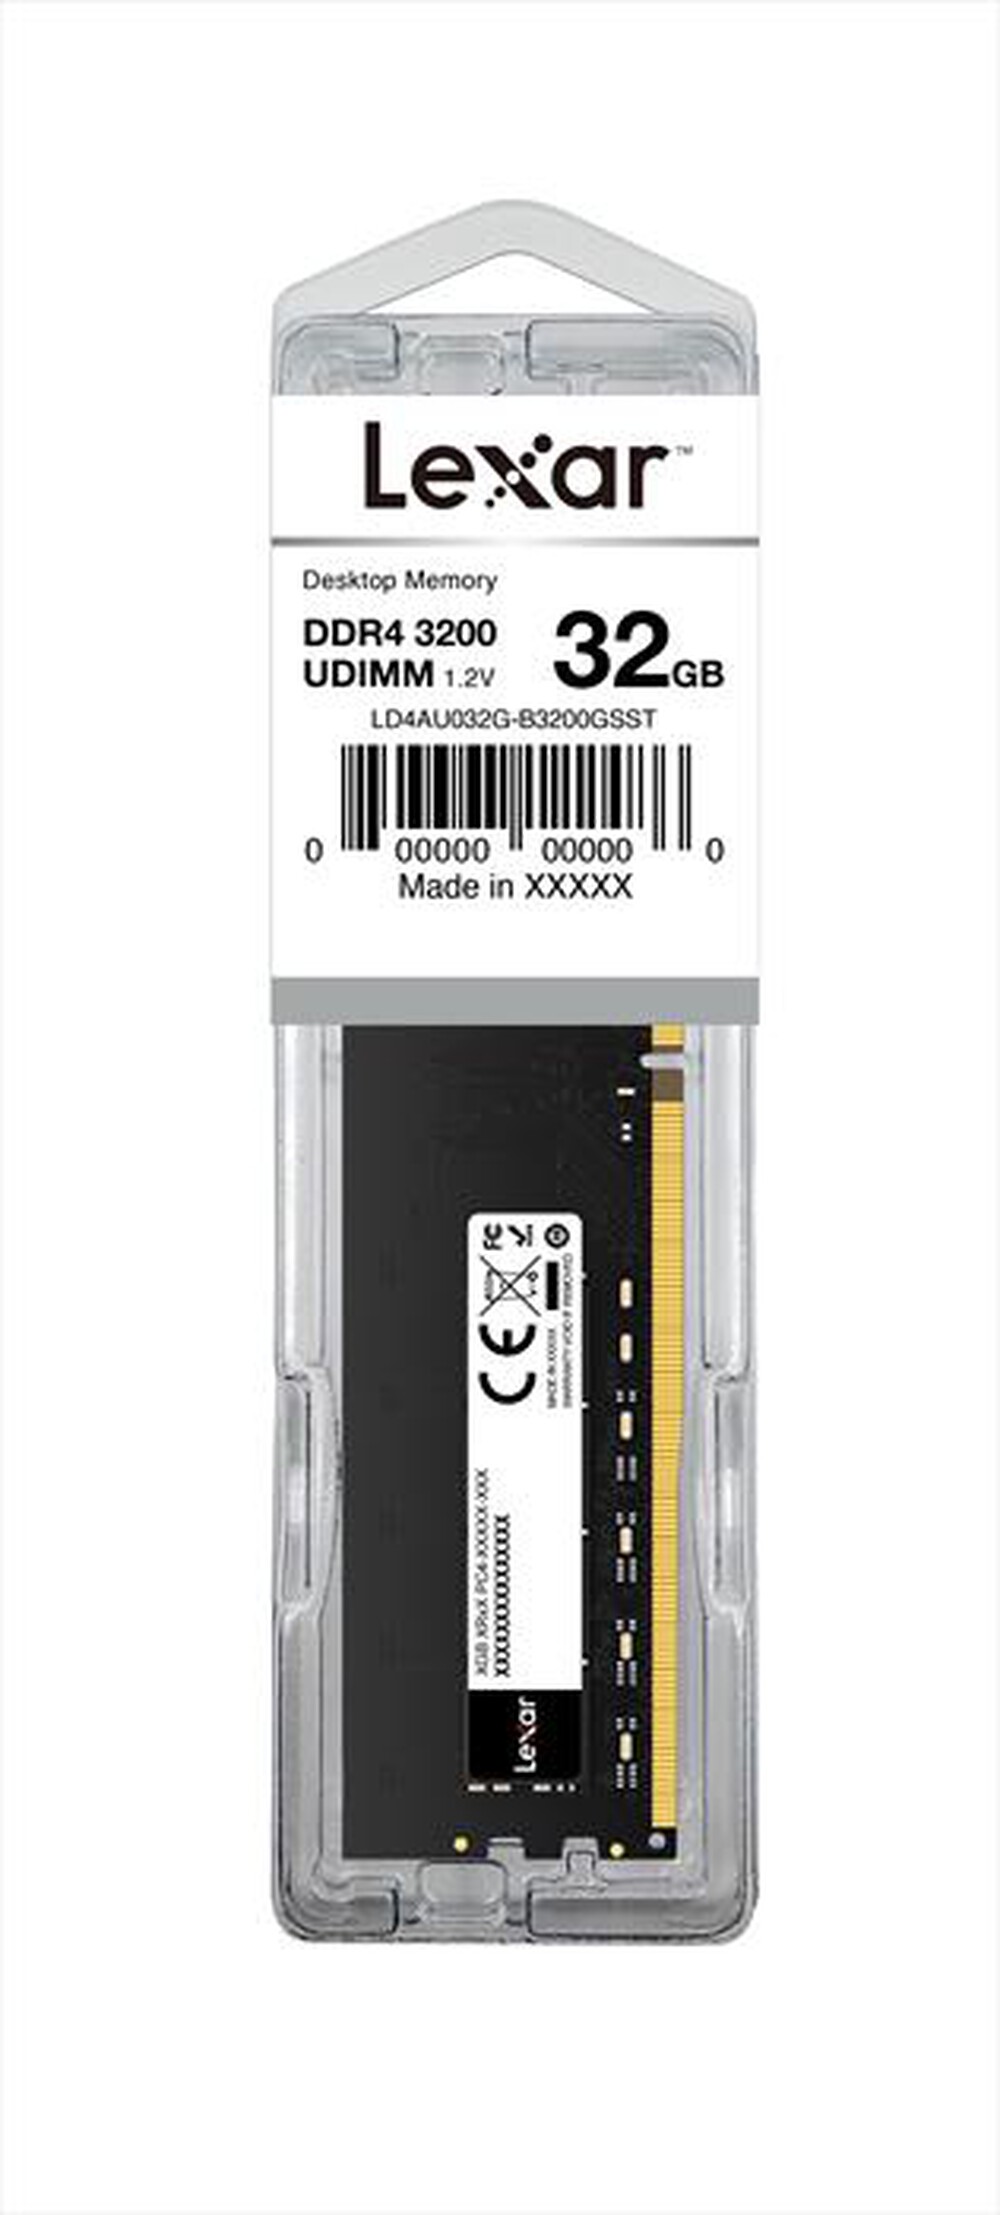 "LEXAR - 32GB DDR4 288 PIN-Black"